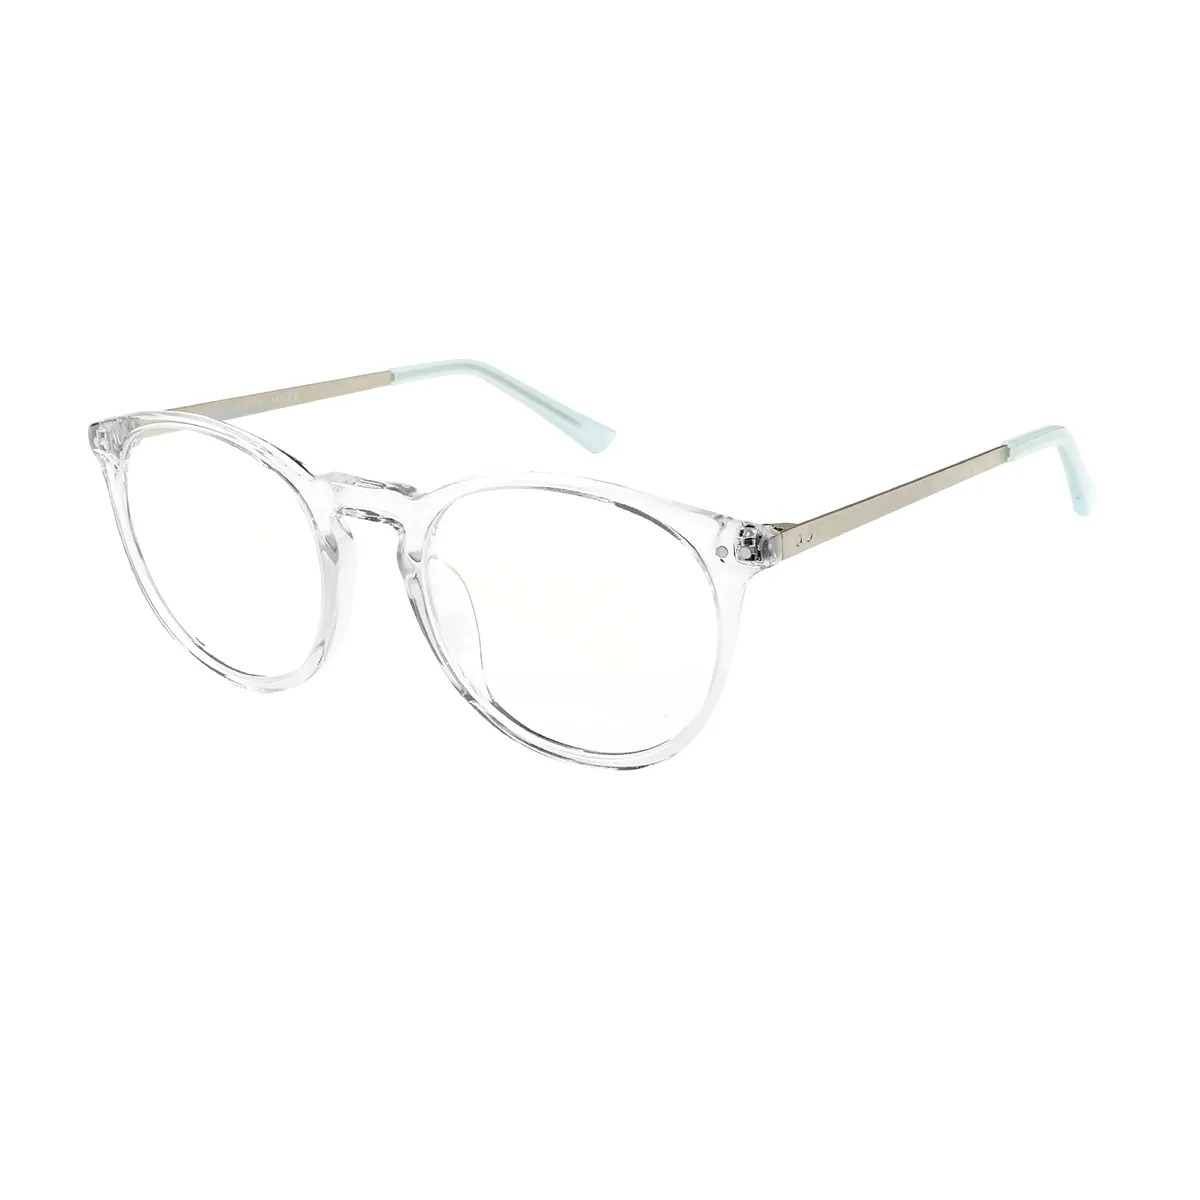 Copeland - Round Translucent Glasses for Women